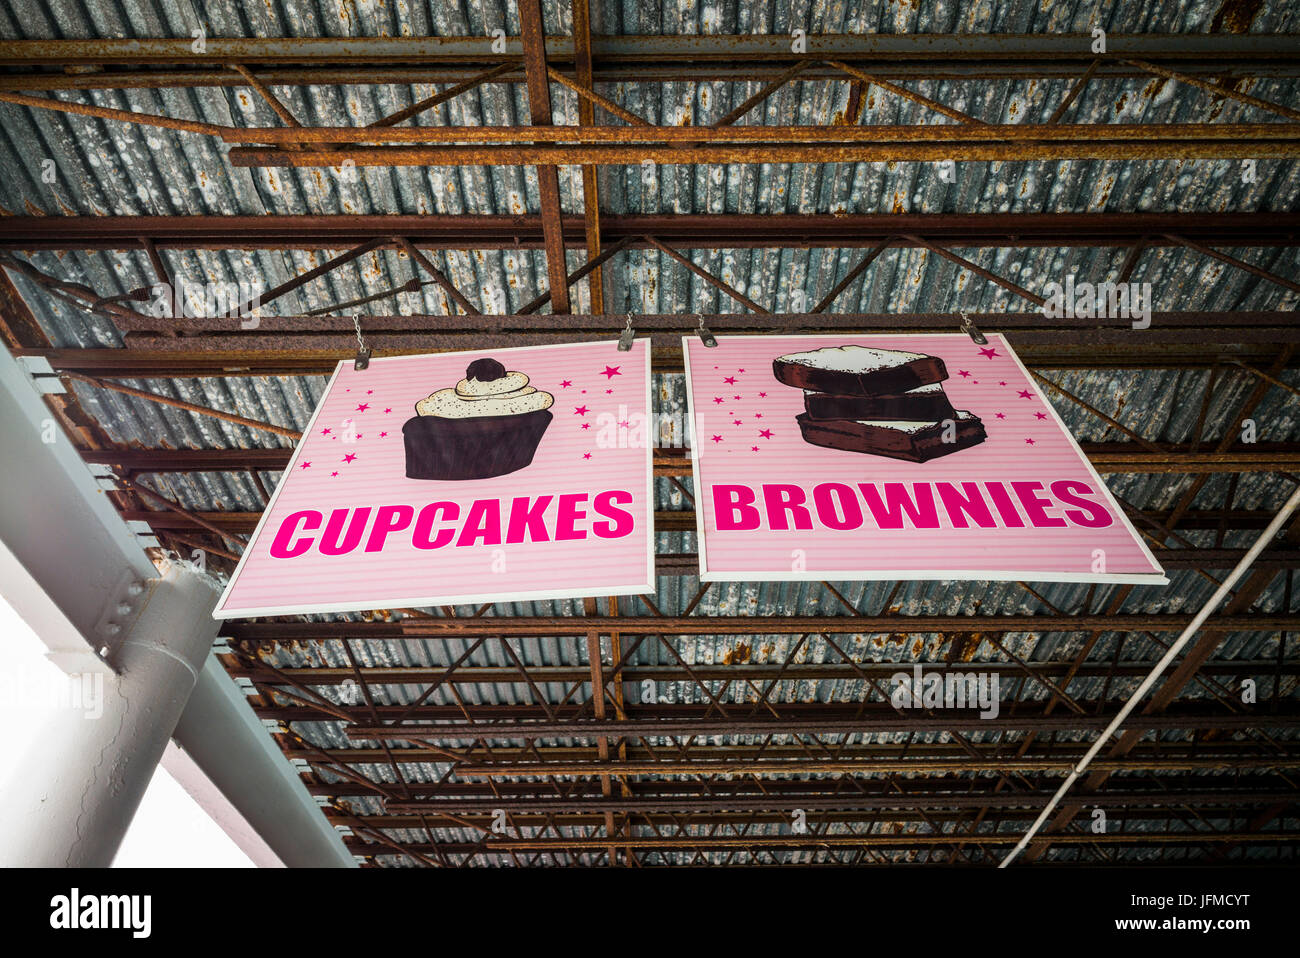 USA, New Hampshire, Hampton Beach, Hampton Beach Seafood Festival, signs for cupcakes and brownies Stock Photo